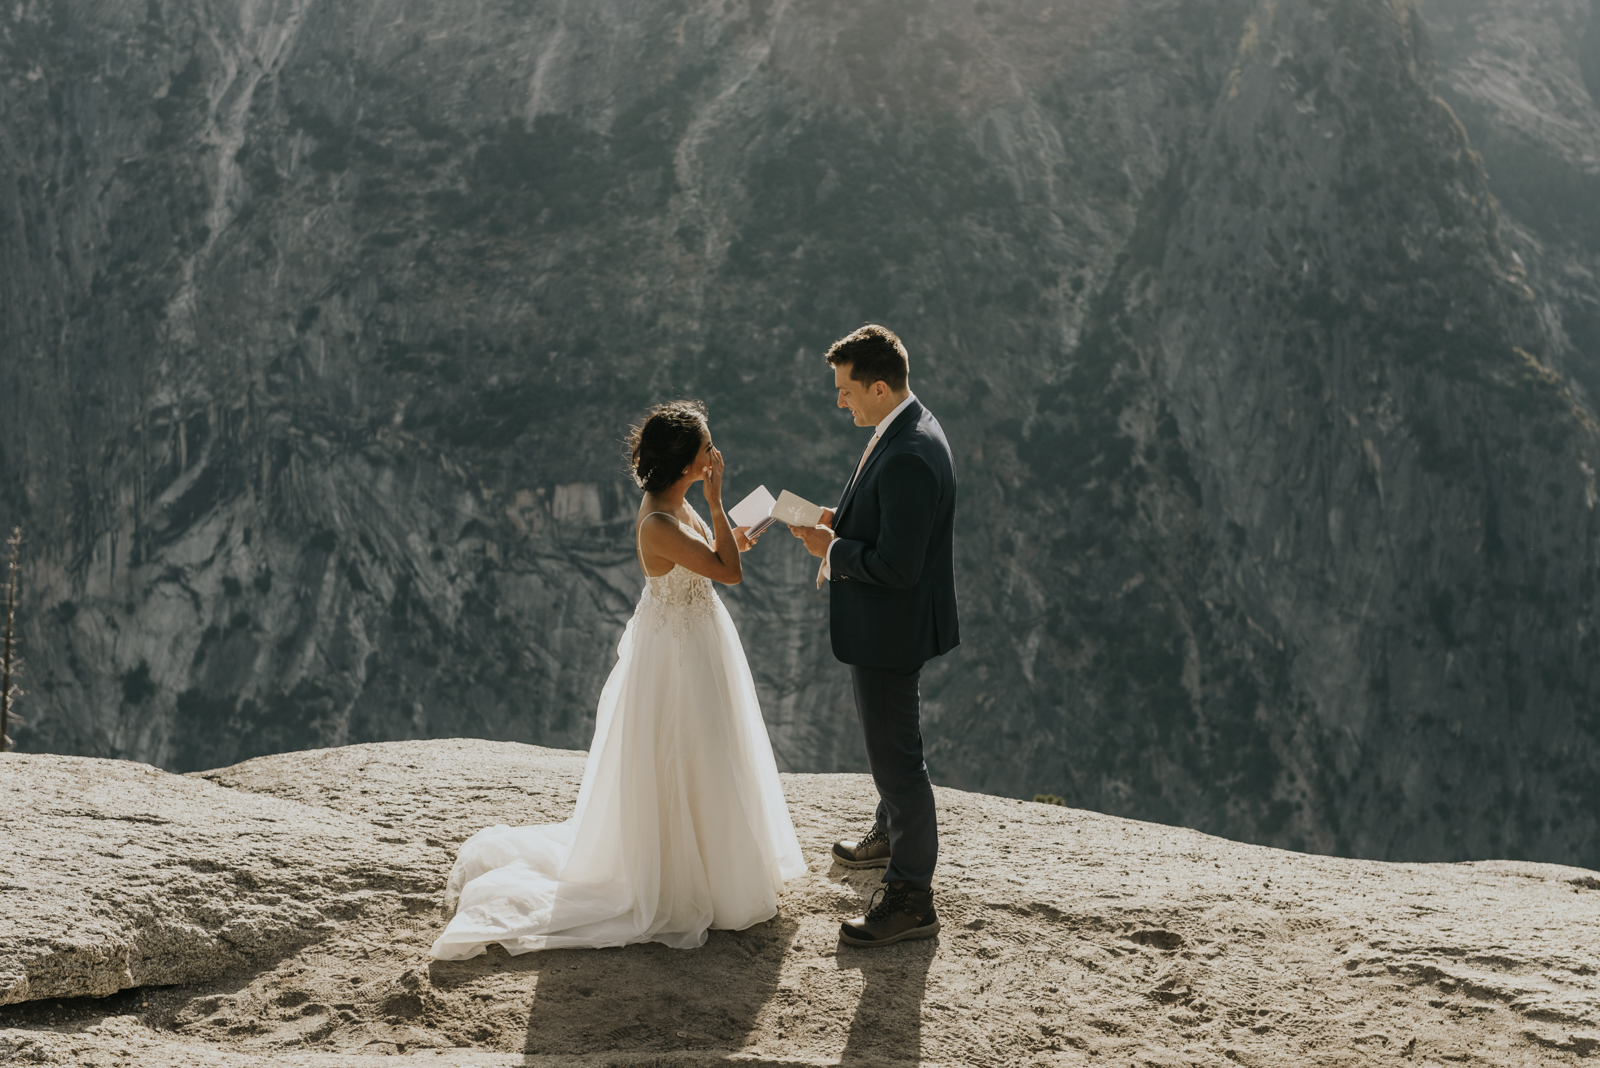 Yosemite National Park Wedding Ceremony, Bride and Groom Reading Vows